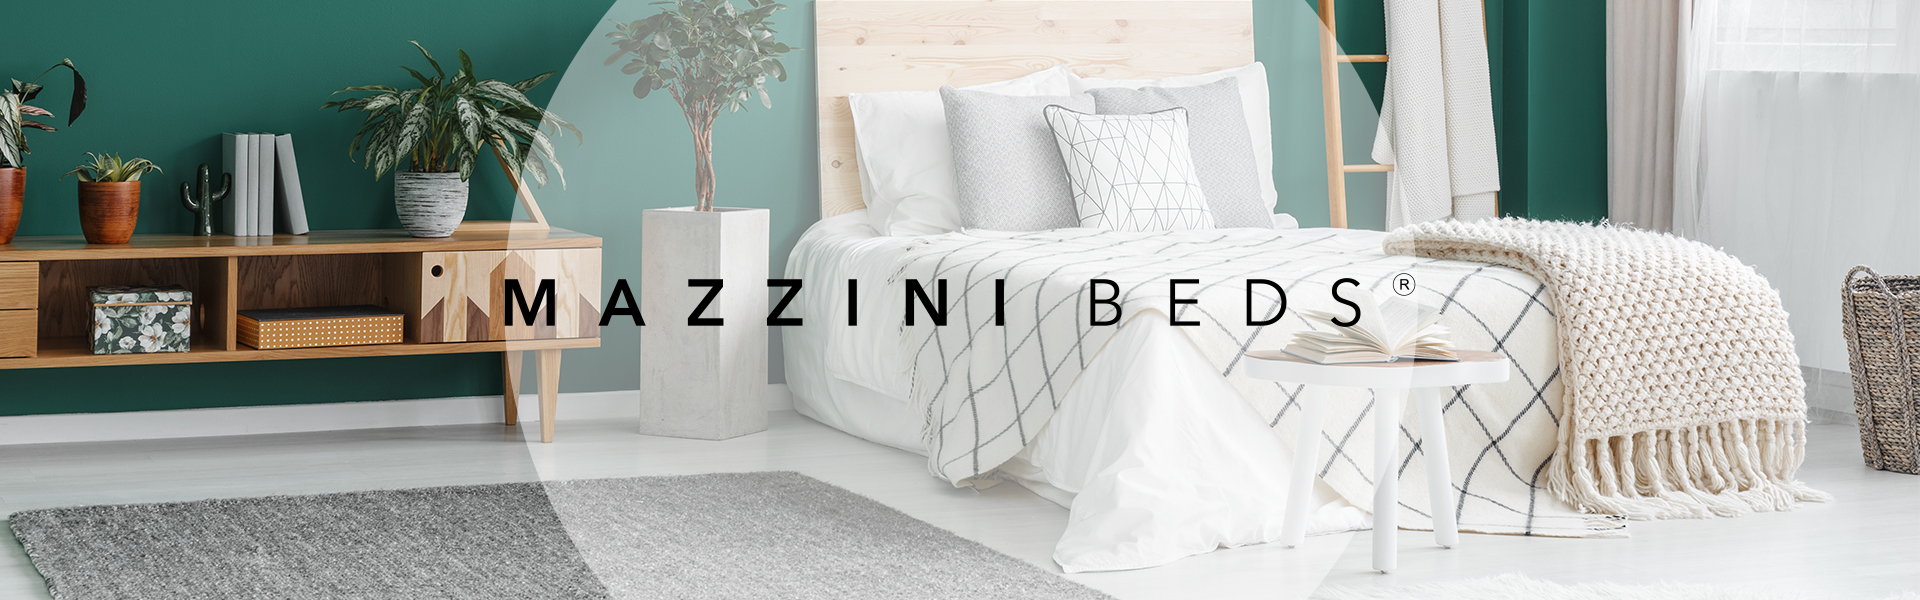 Sänky Mazzini Beds Jade 180x200 cm, vaaleanharmaa 